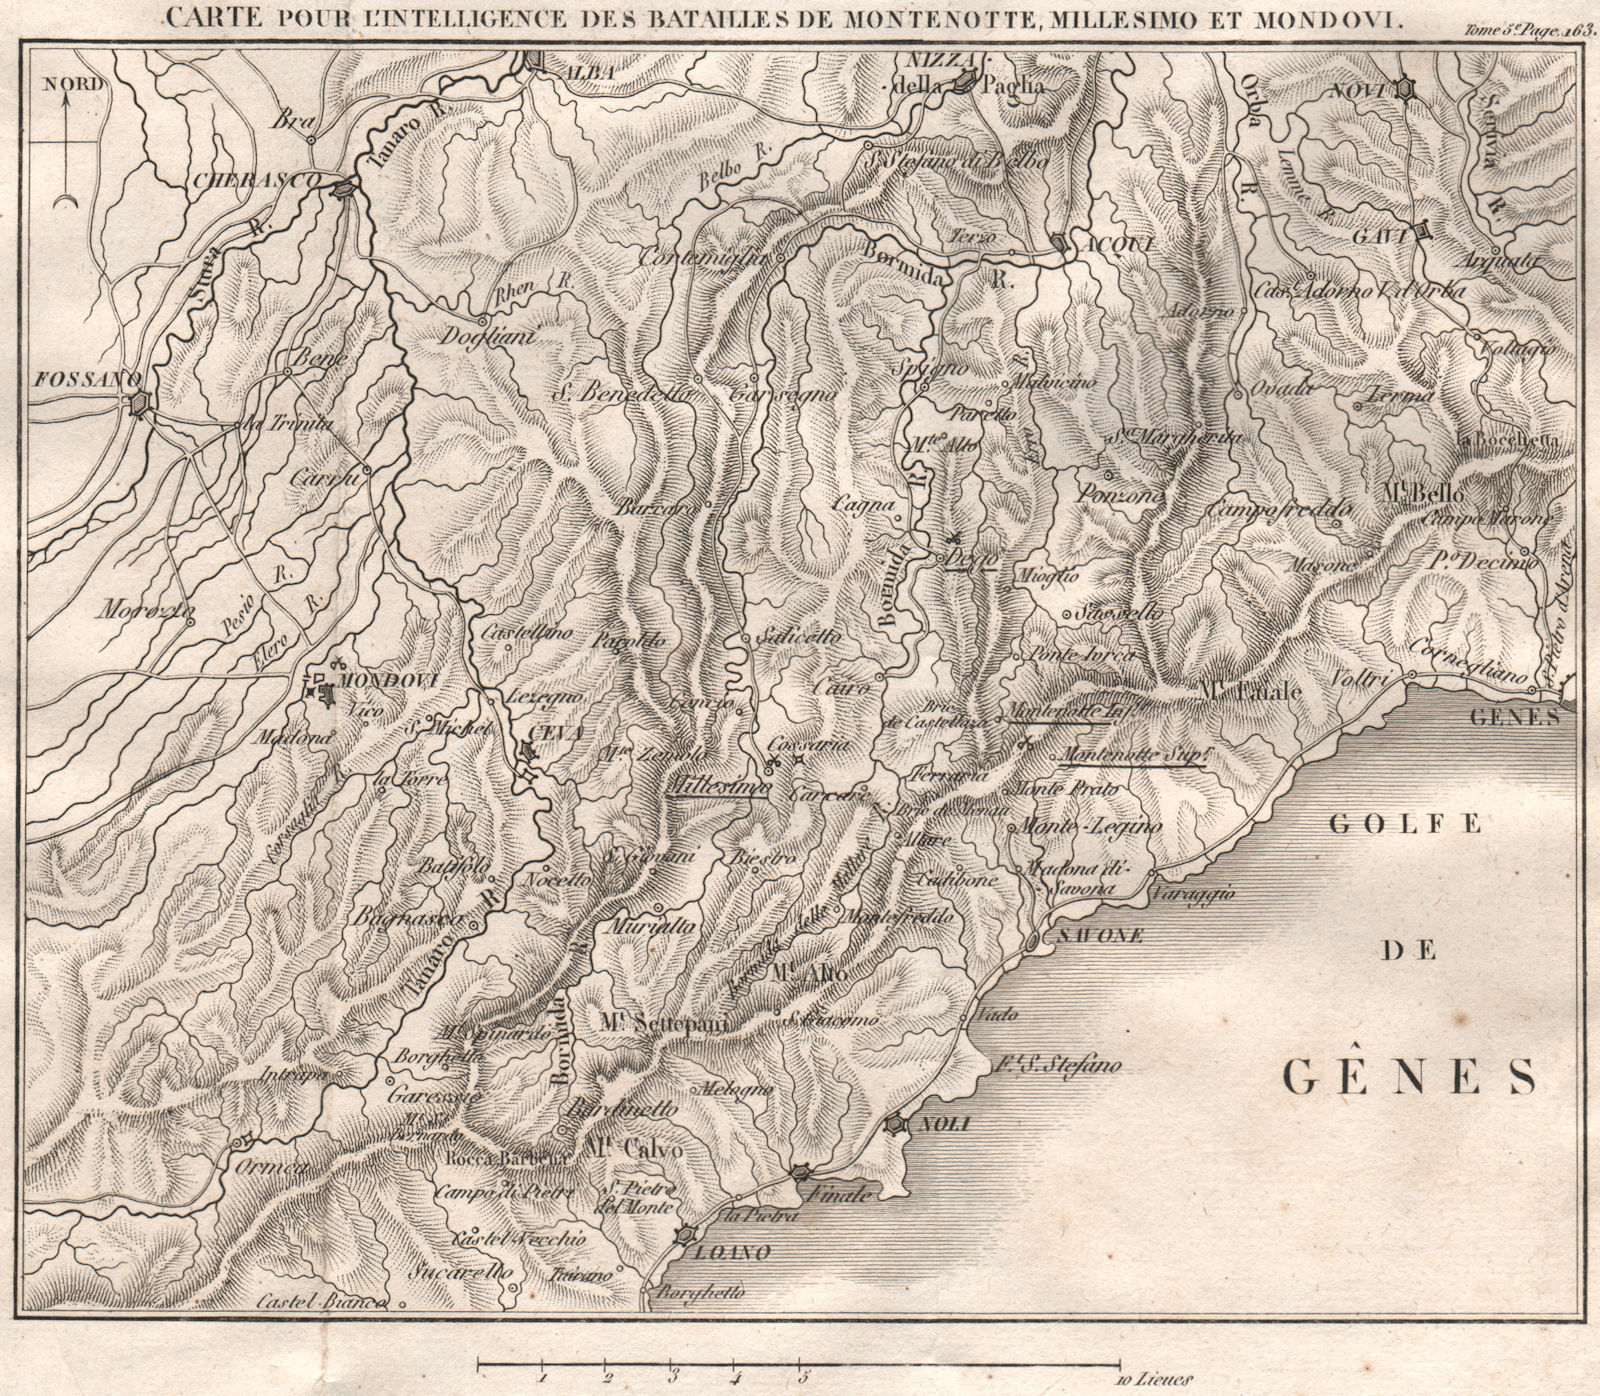 Associate Product LIGURIA. Battles of Montenotte, Millesimo & Mondovi 1796. Italy 1817 old map